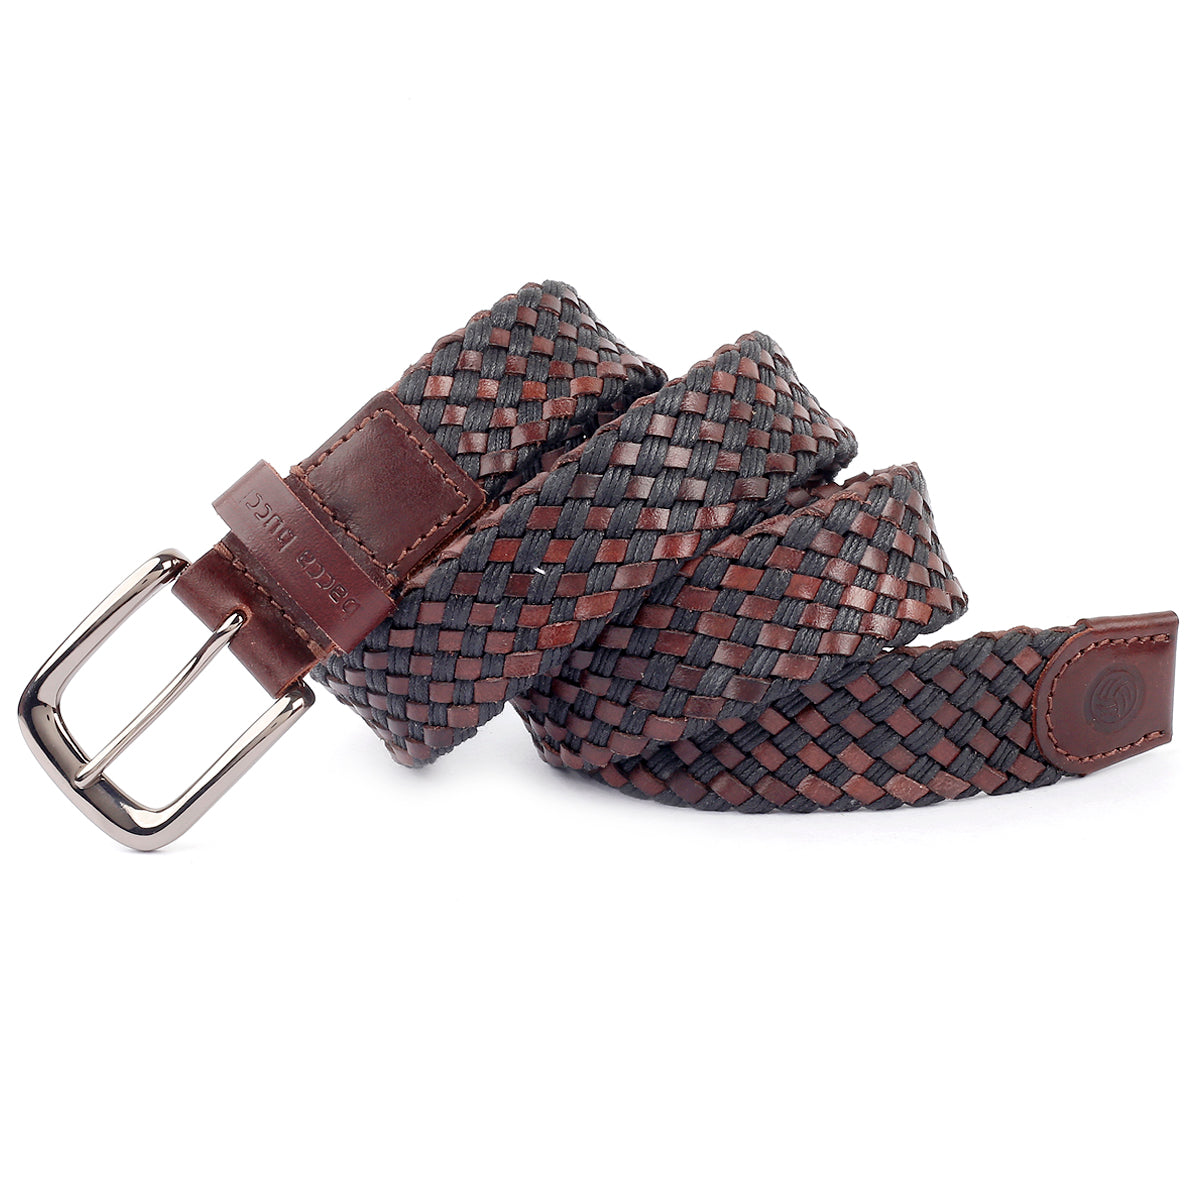 Best Deal for Bacca Bucci Men's Genuine Handmade Braided Leather Belt